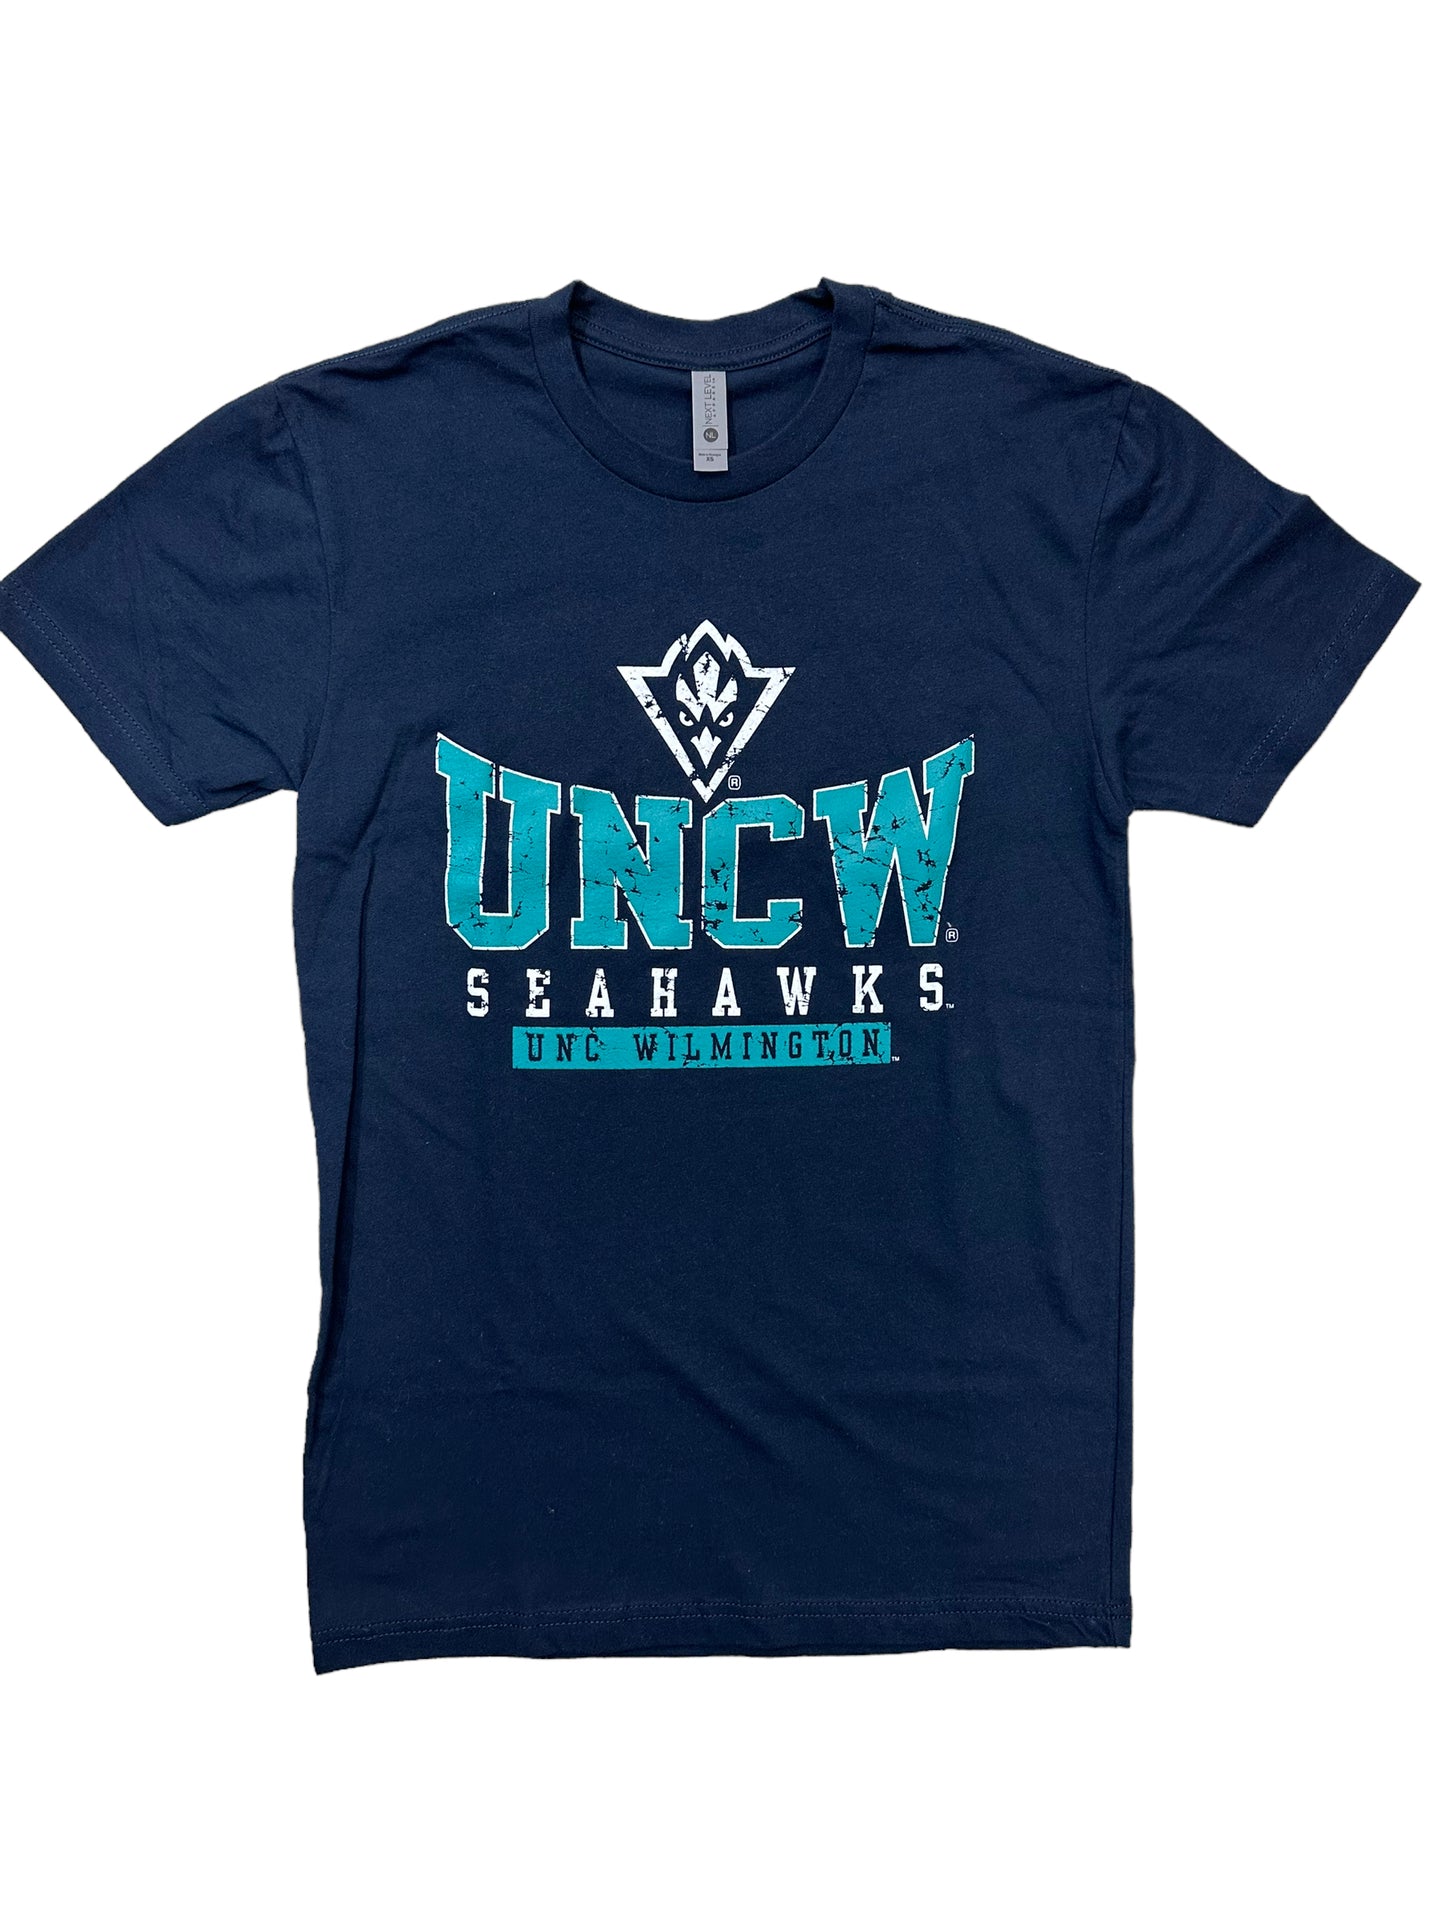 Uncw Retro - T Shirt - True Navy